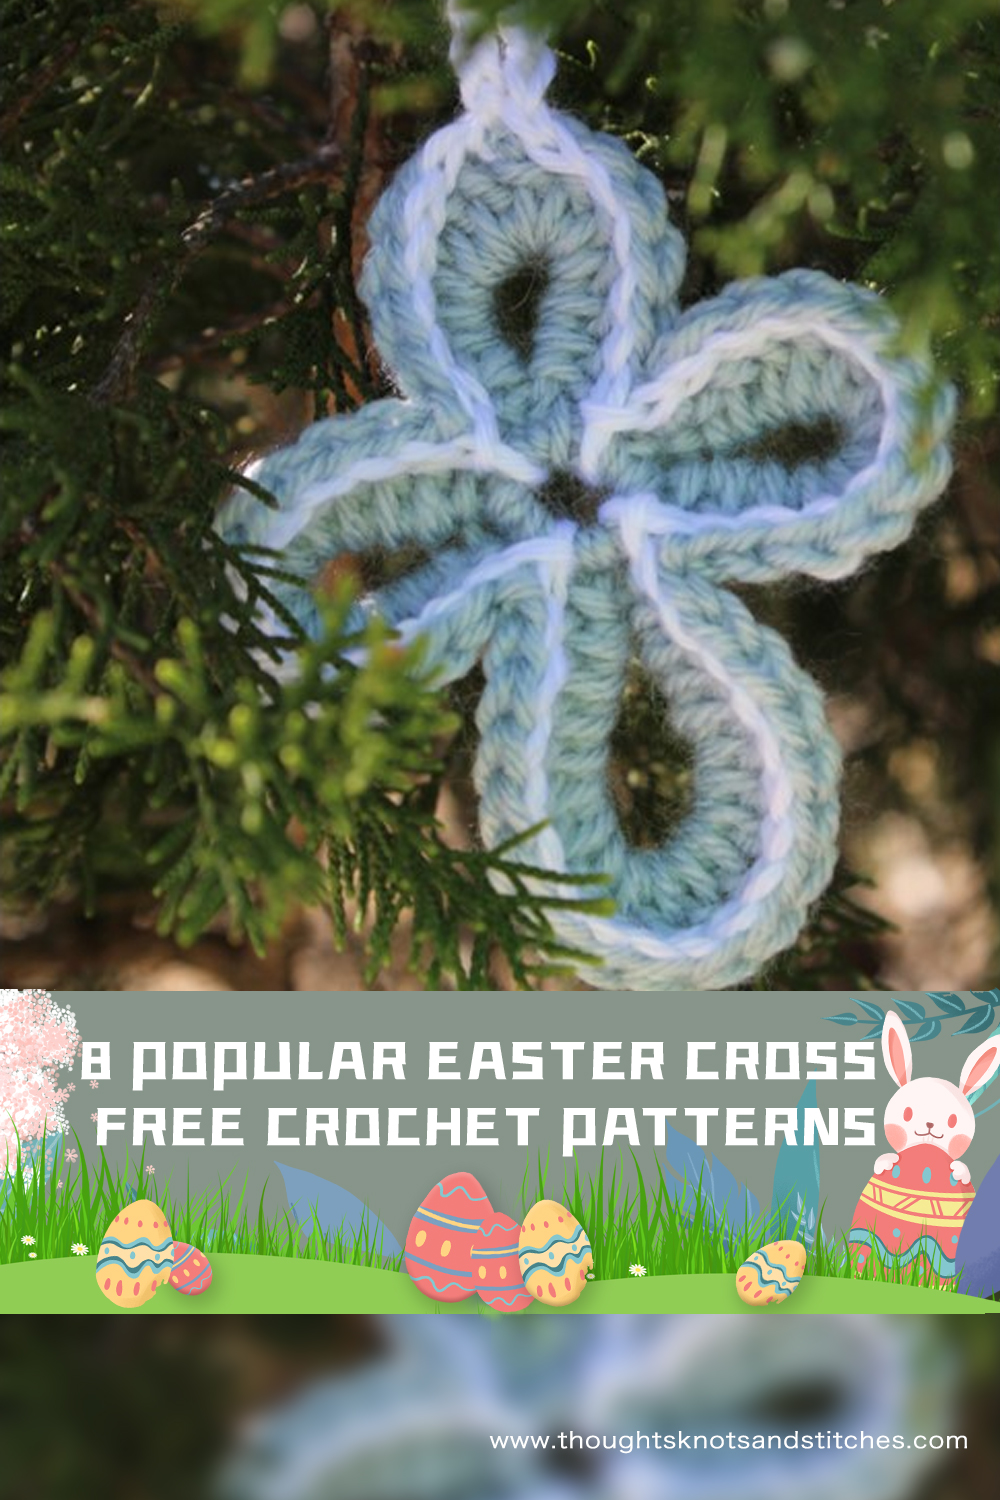 8 FREE Popular Crochet Easter Cross Patterns